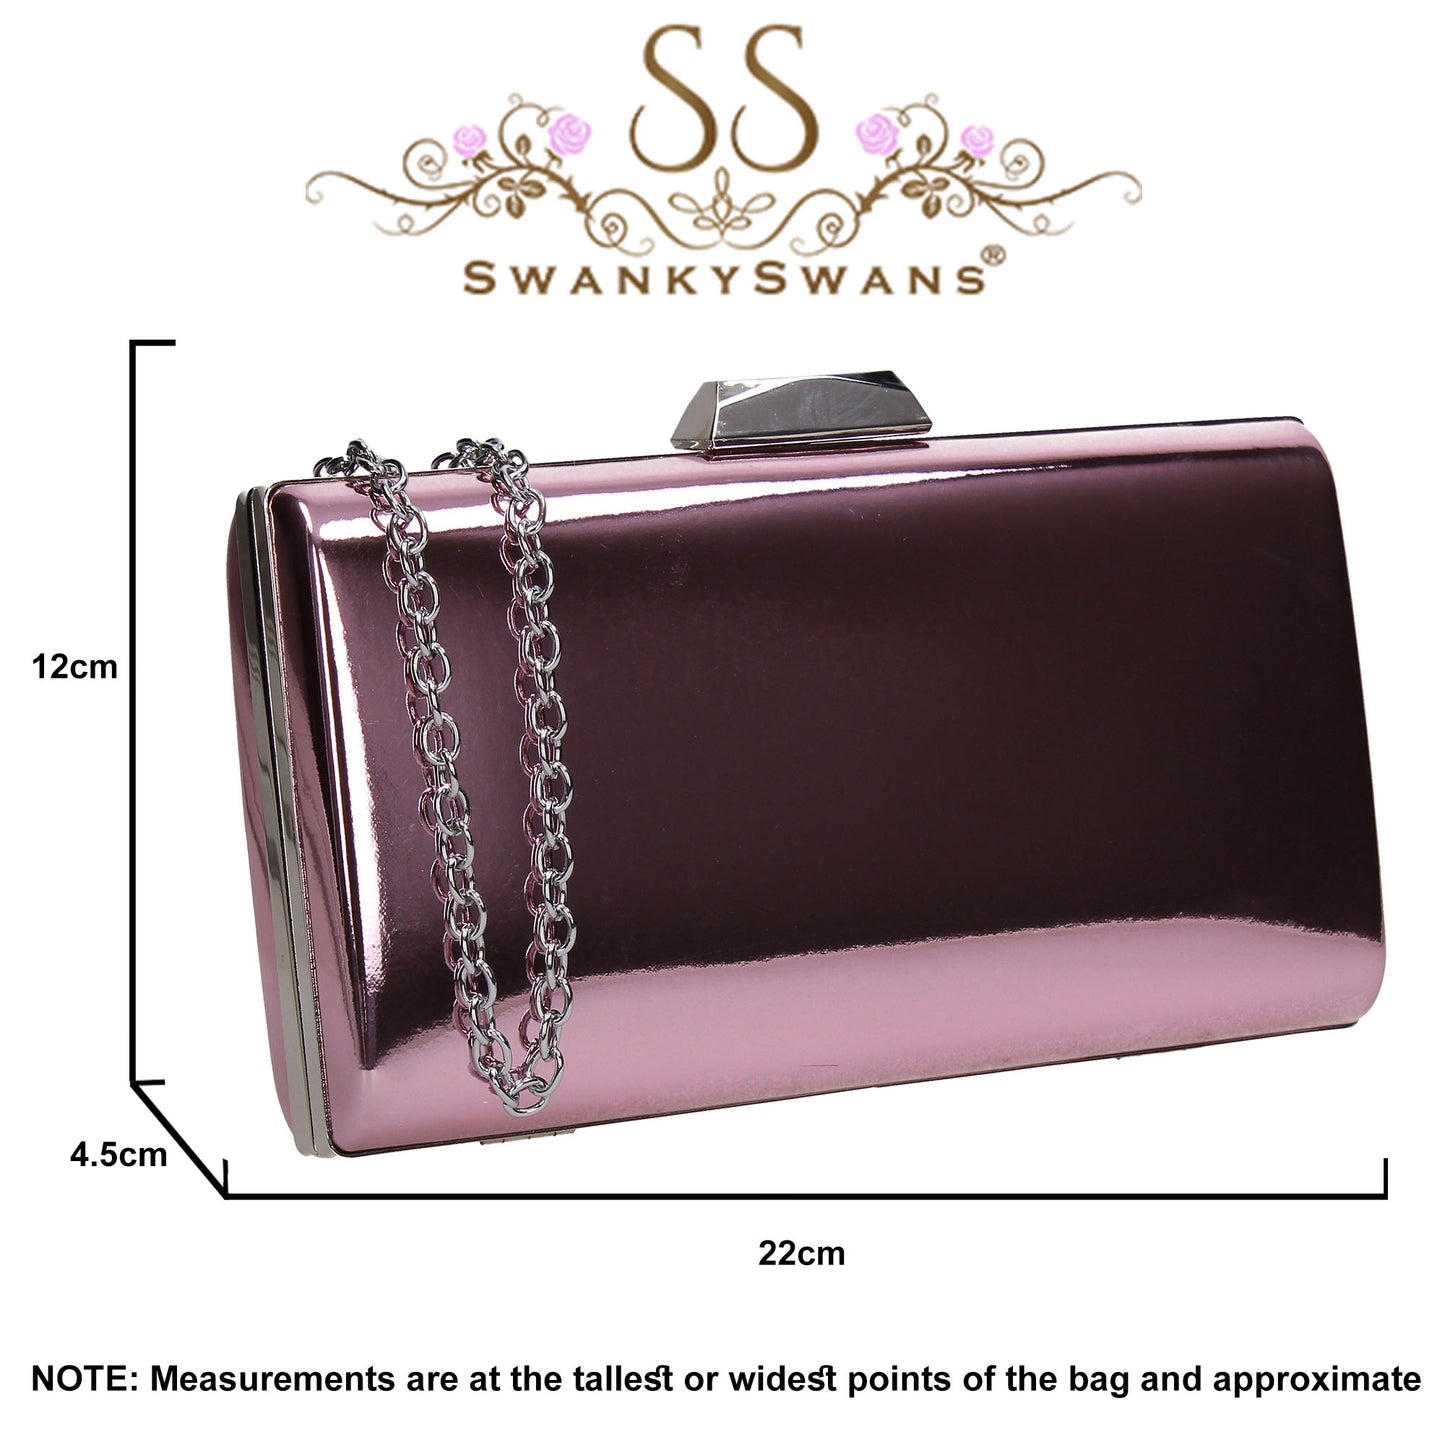 SWANKYSWANS Finley Clutch Bag Pink Cute Cheap Clutch Bag For Weddings School and Work